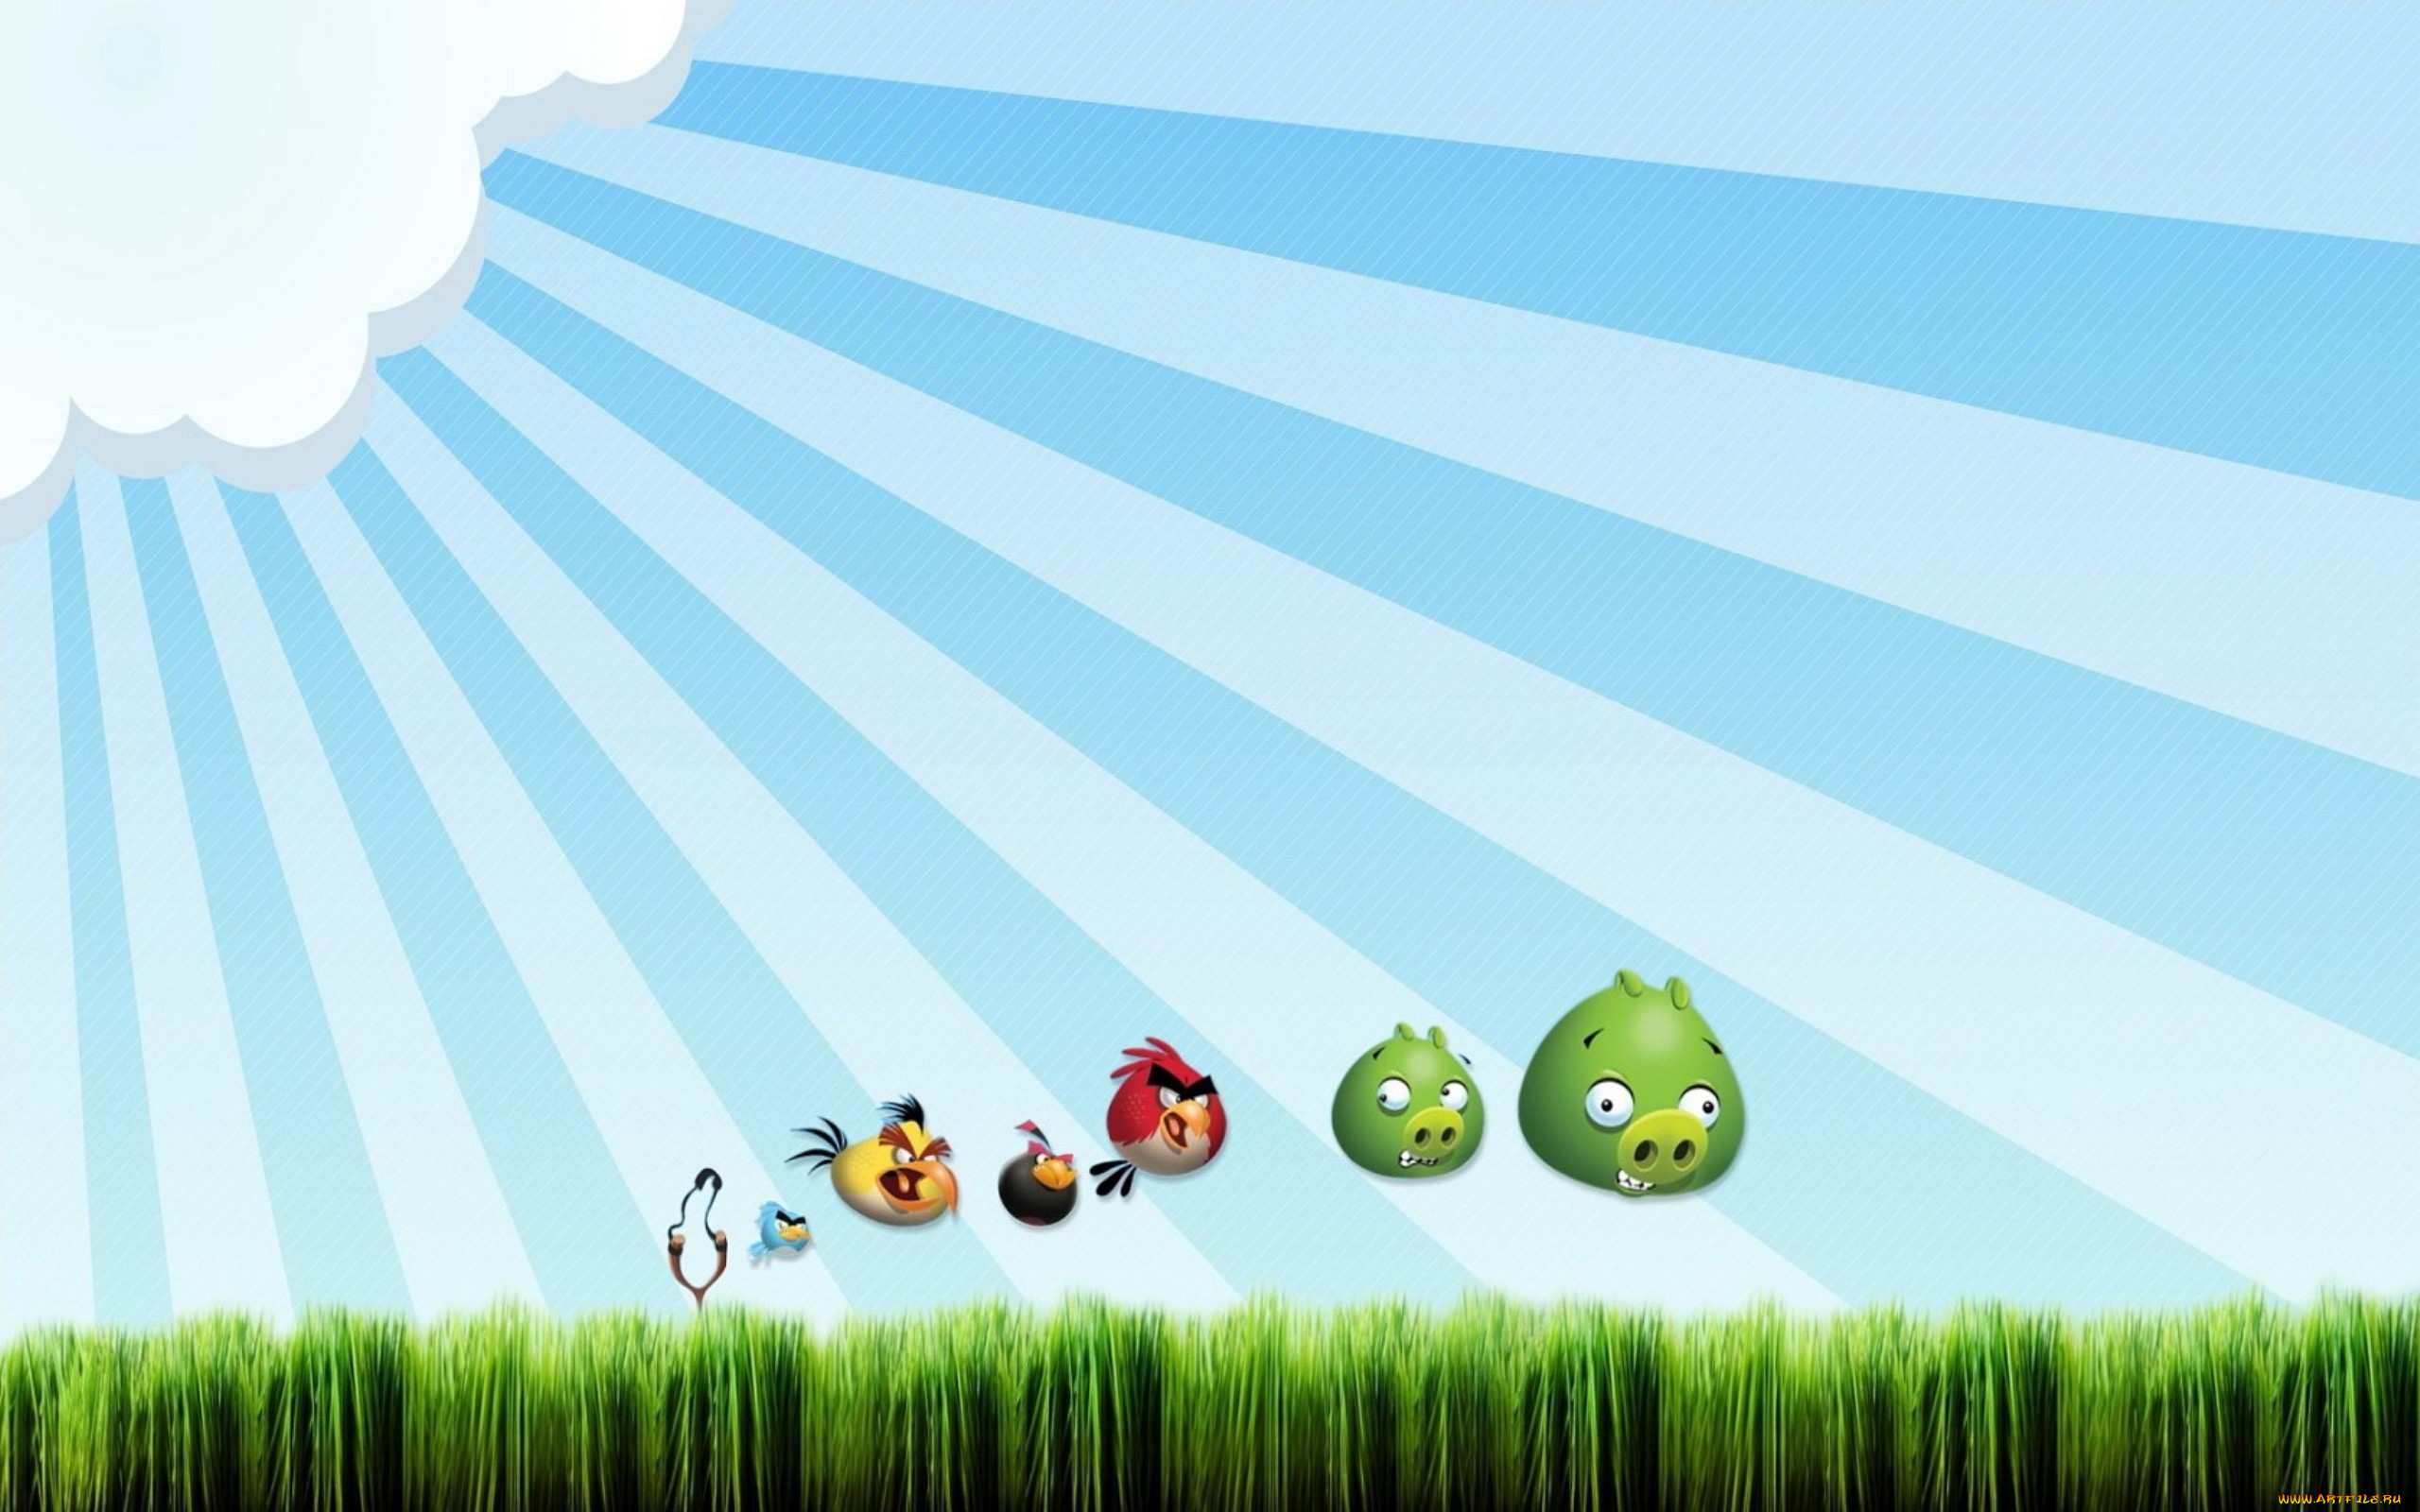 Angry birds 1.5 2. Злые птицы. Злые птички обои. Фон Энгри бердз. Angry Birds (игра).